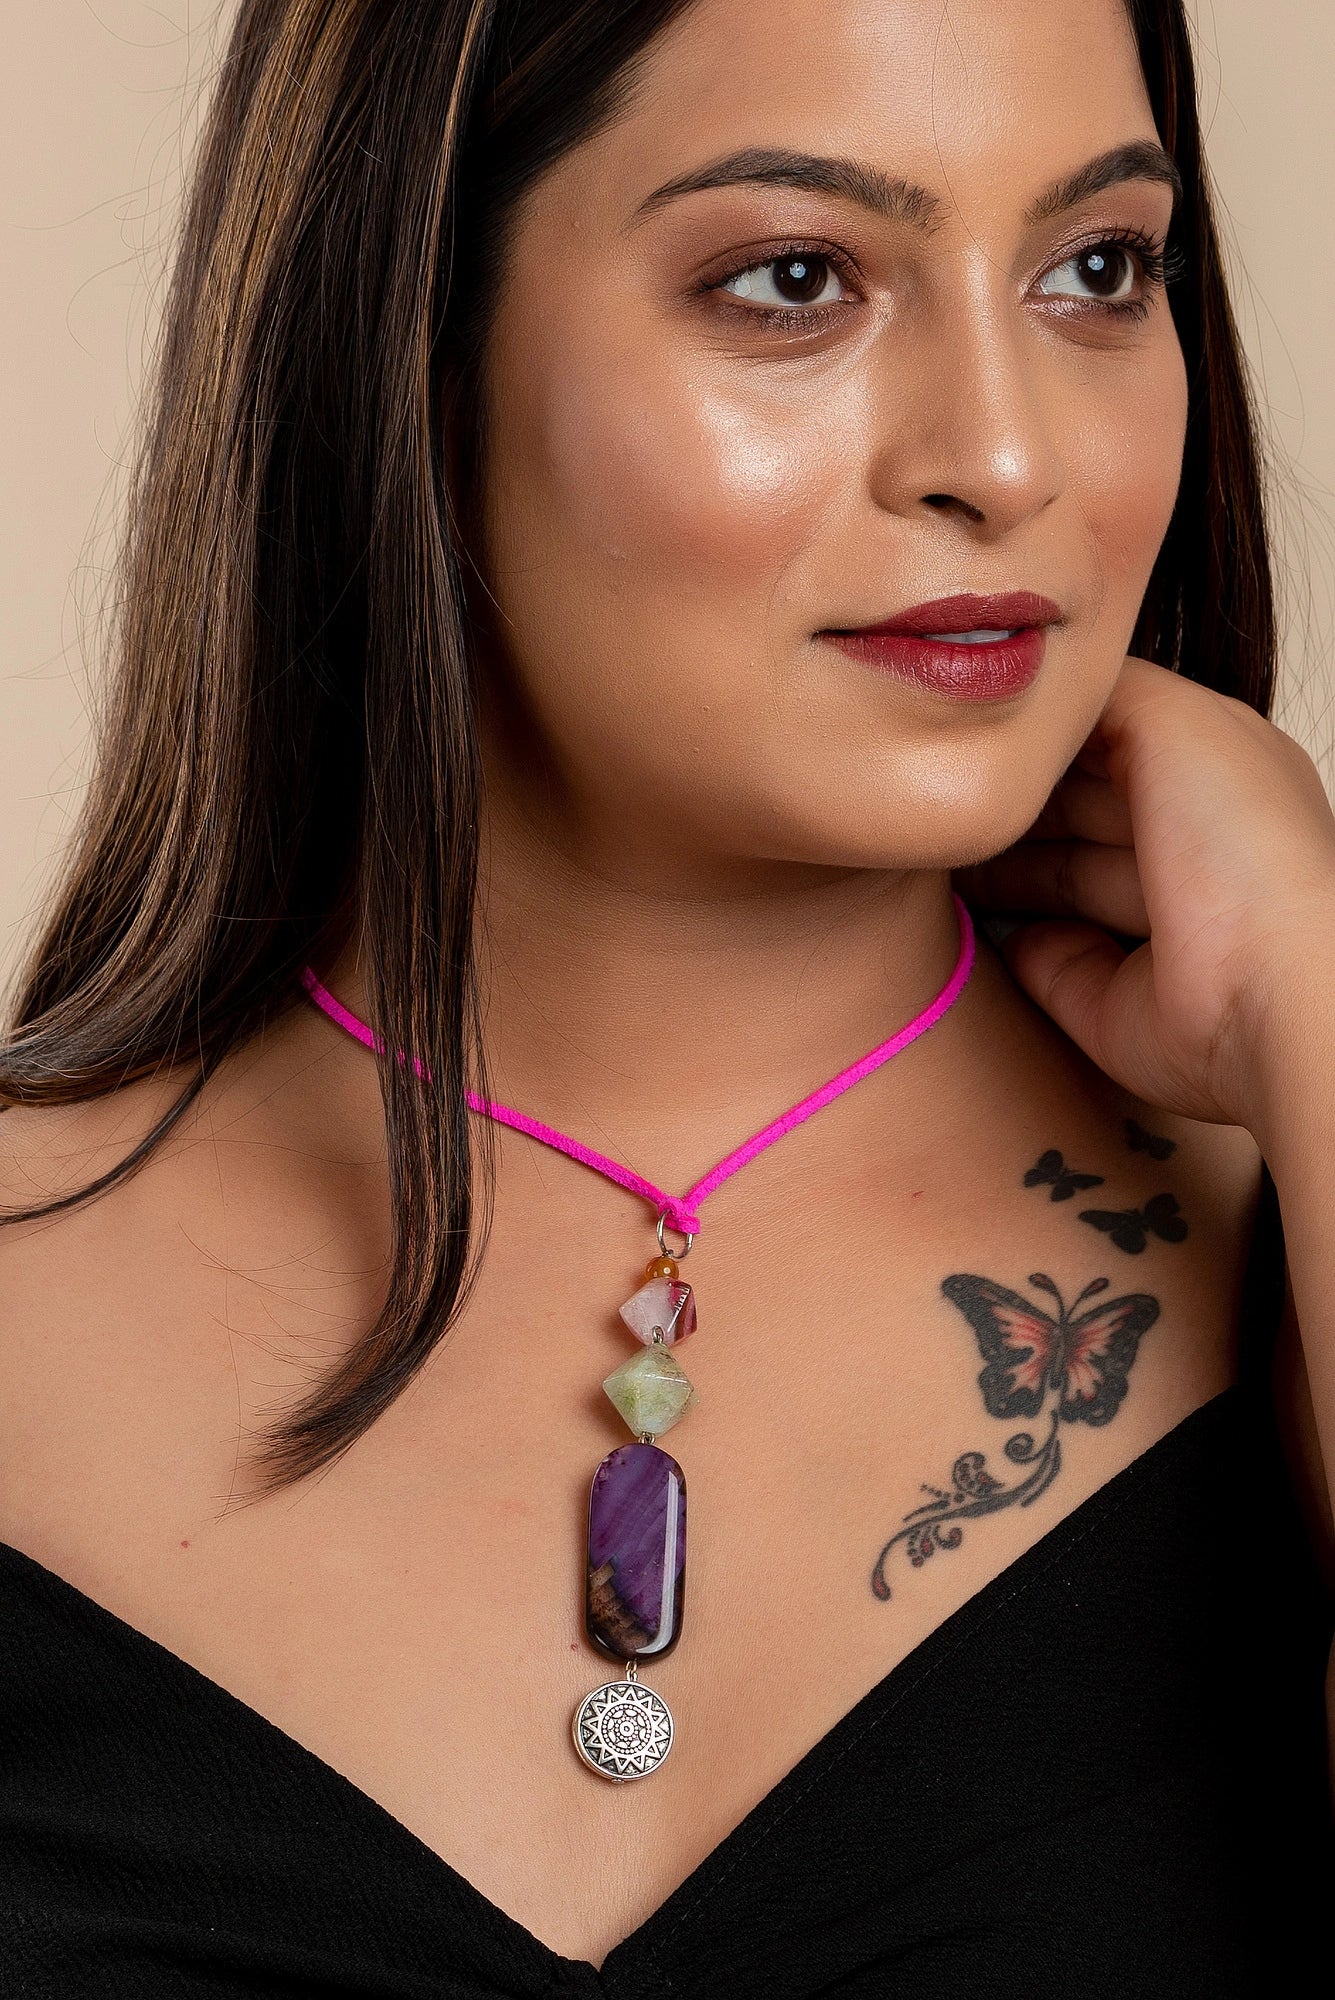 Designer Semi precious stones agate onyx sleek Neckpiece Strung with Pink Adjustable Suede cord